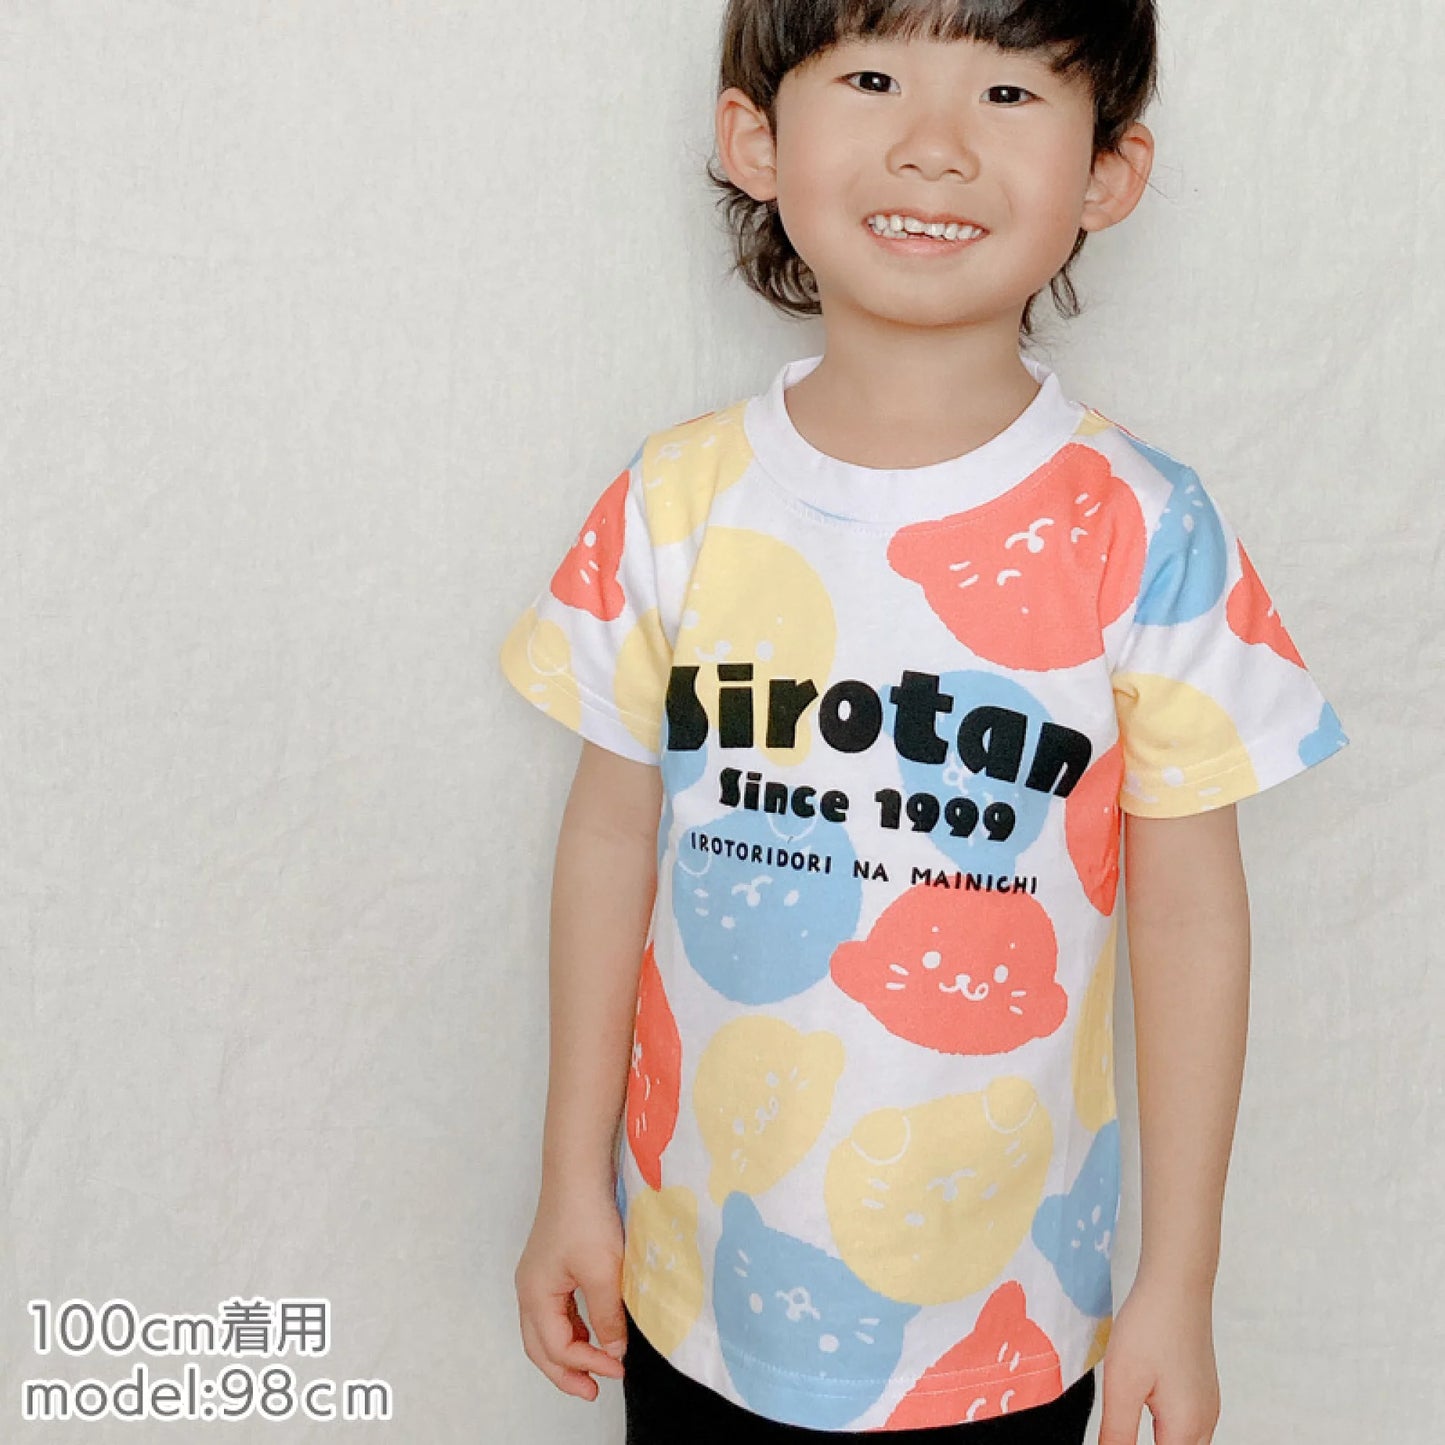 Sirotan 親子裝T shirt 【Since 1999】